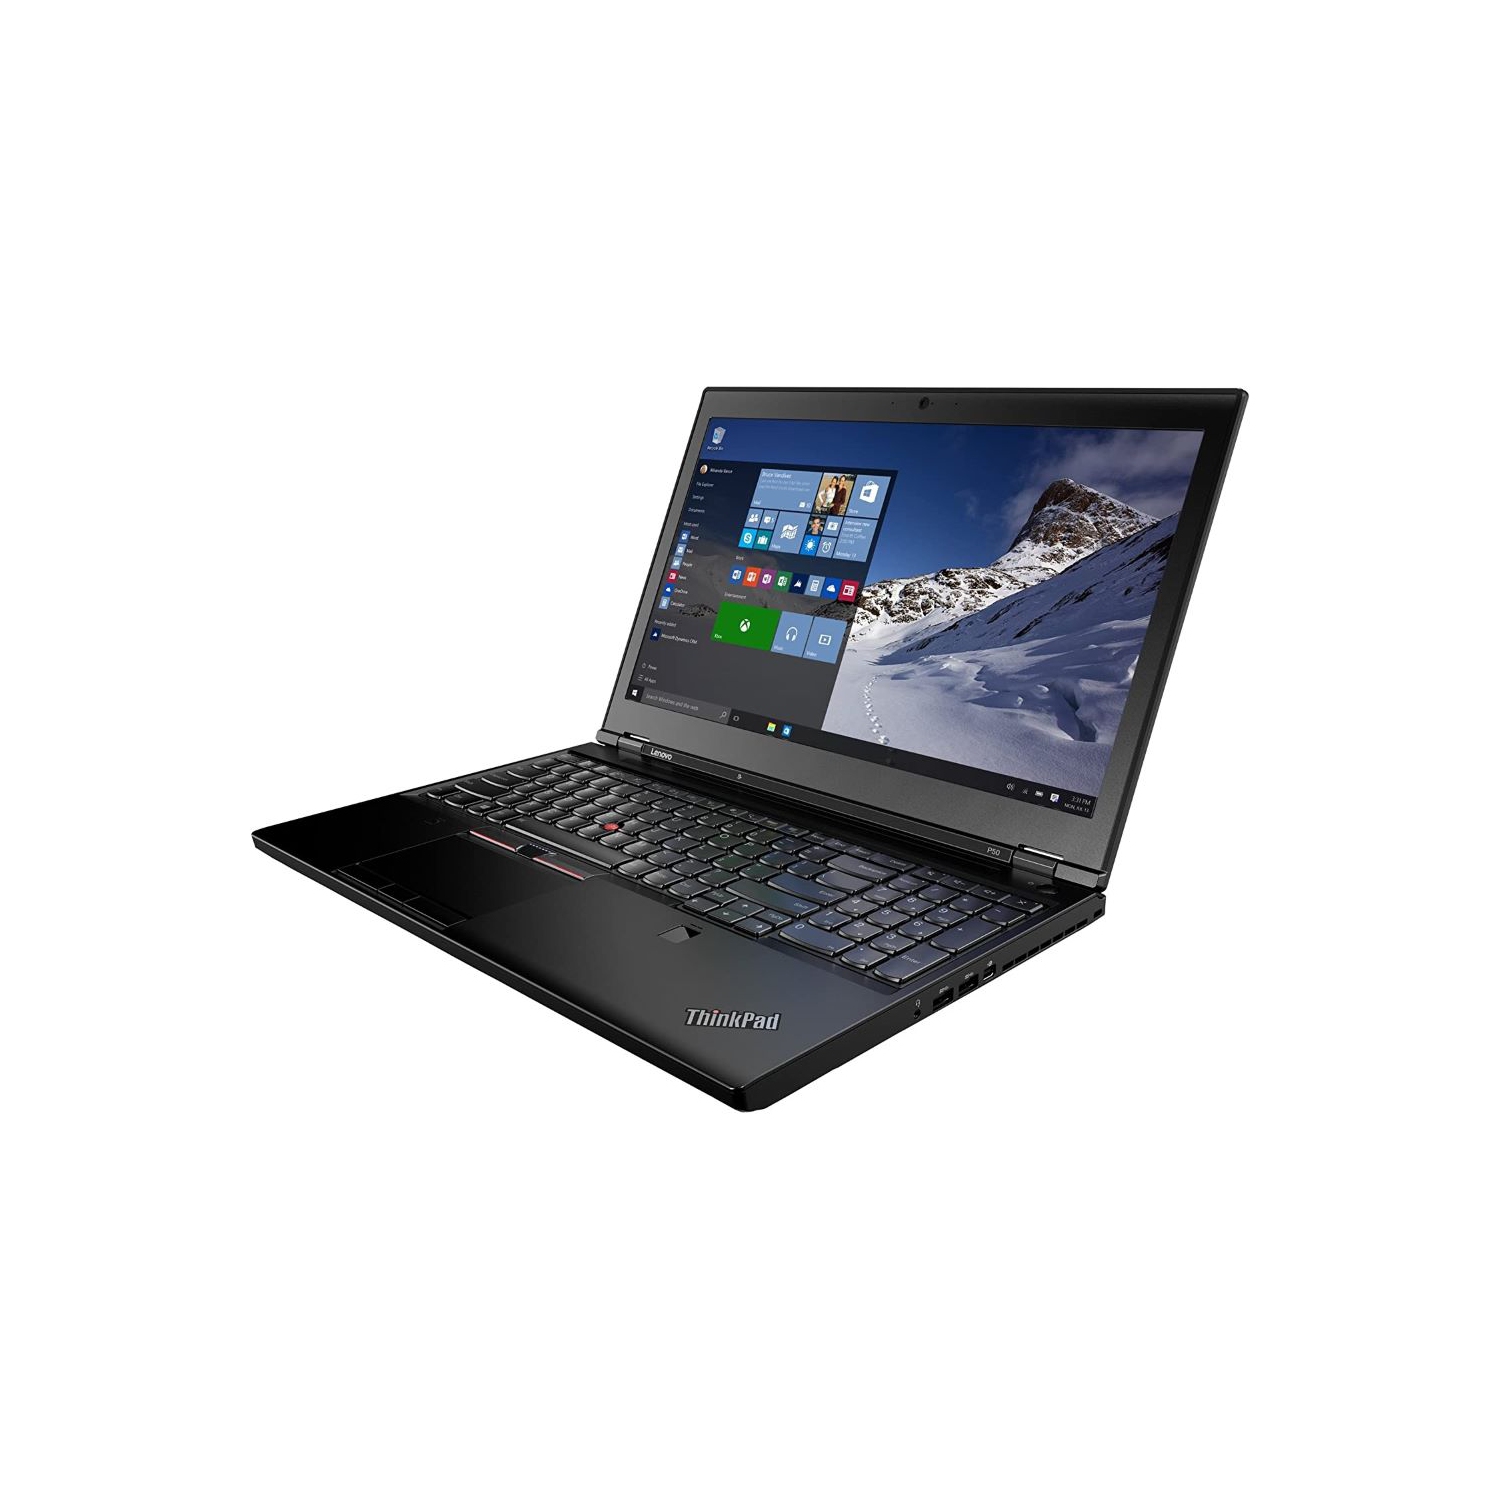 Refurbished (Good) Lenovo ThinkPad P50 Laptop Intel Quad Core i7-6700HQ, 2.6GHz, 16GB, 500GB SSD, Dedicate NVIDIA Quadro M1000M 2GB Video Card, 15.6" TFT, Win 10Pro